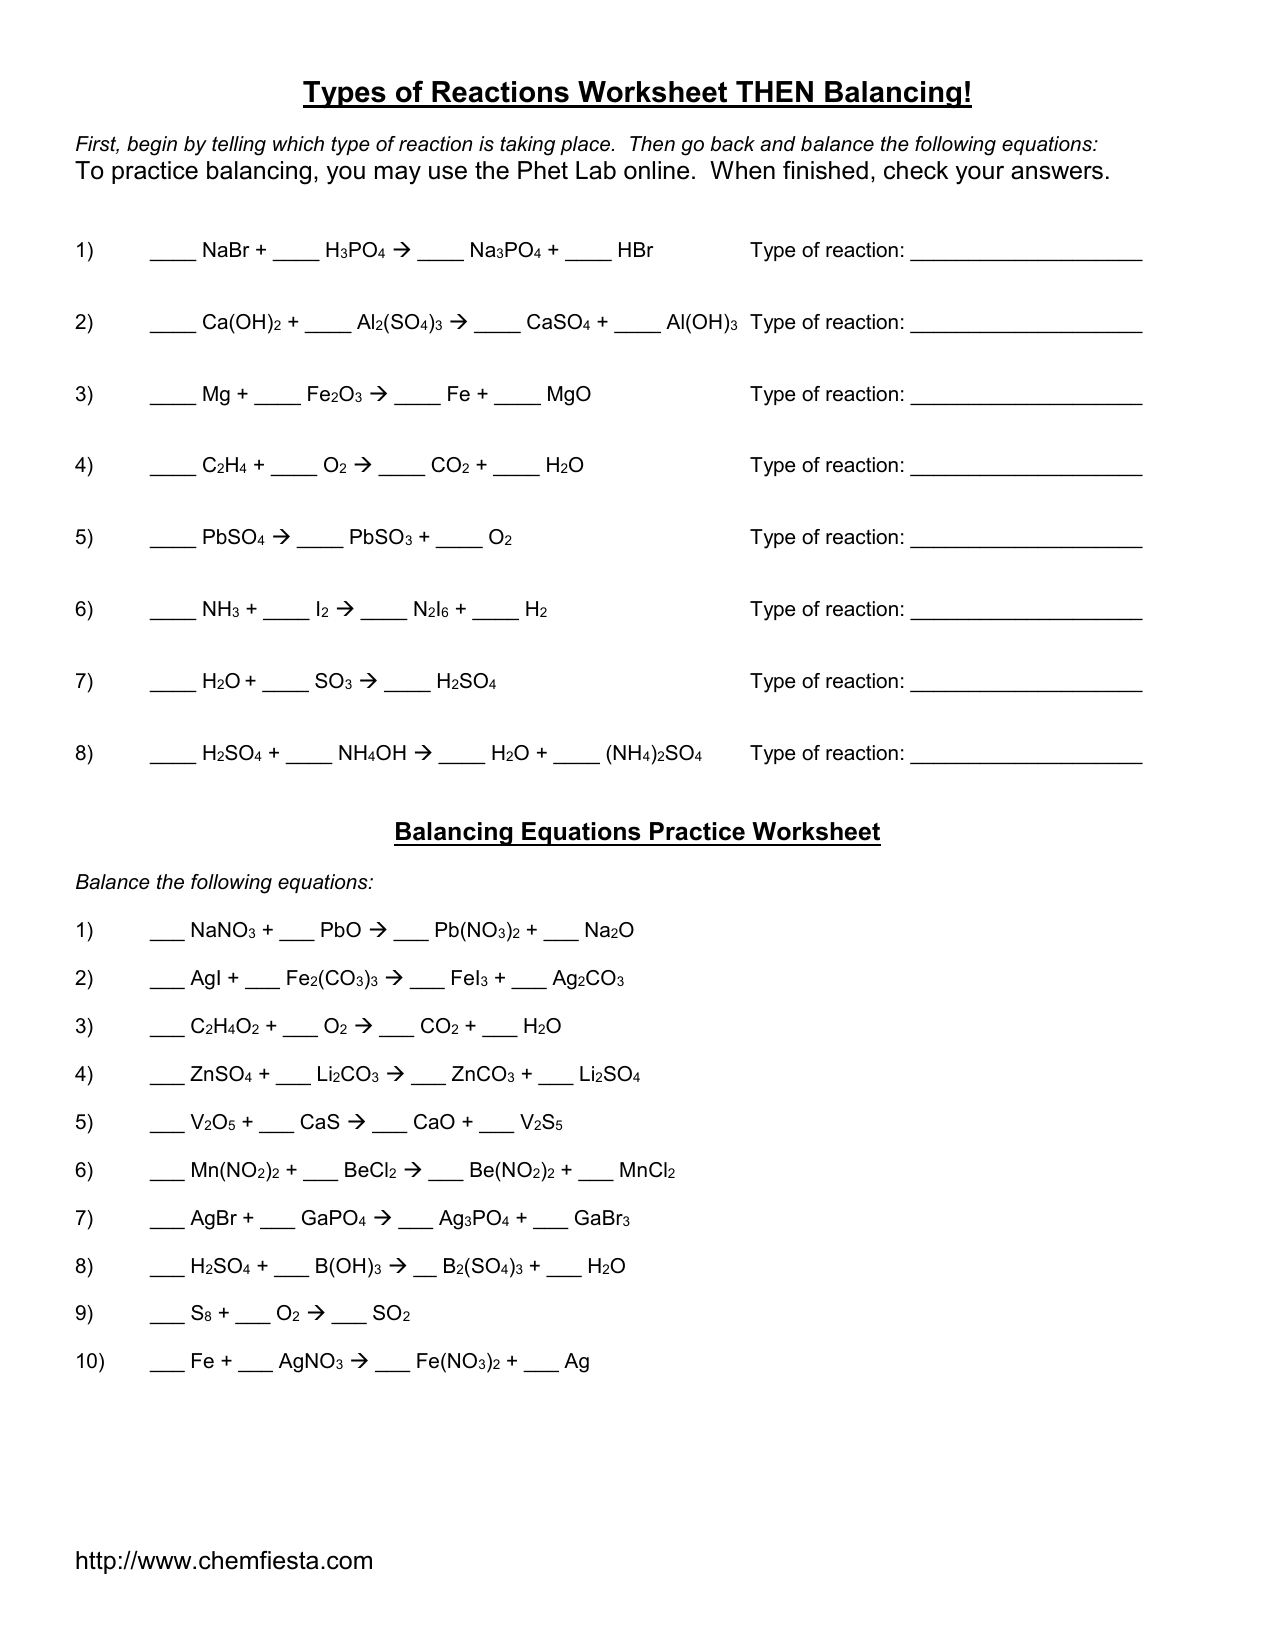 Balancing Equations Practice Worksheet Pertaining To Balancing Equations Practice Worksheet Answers